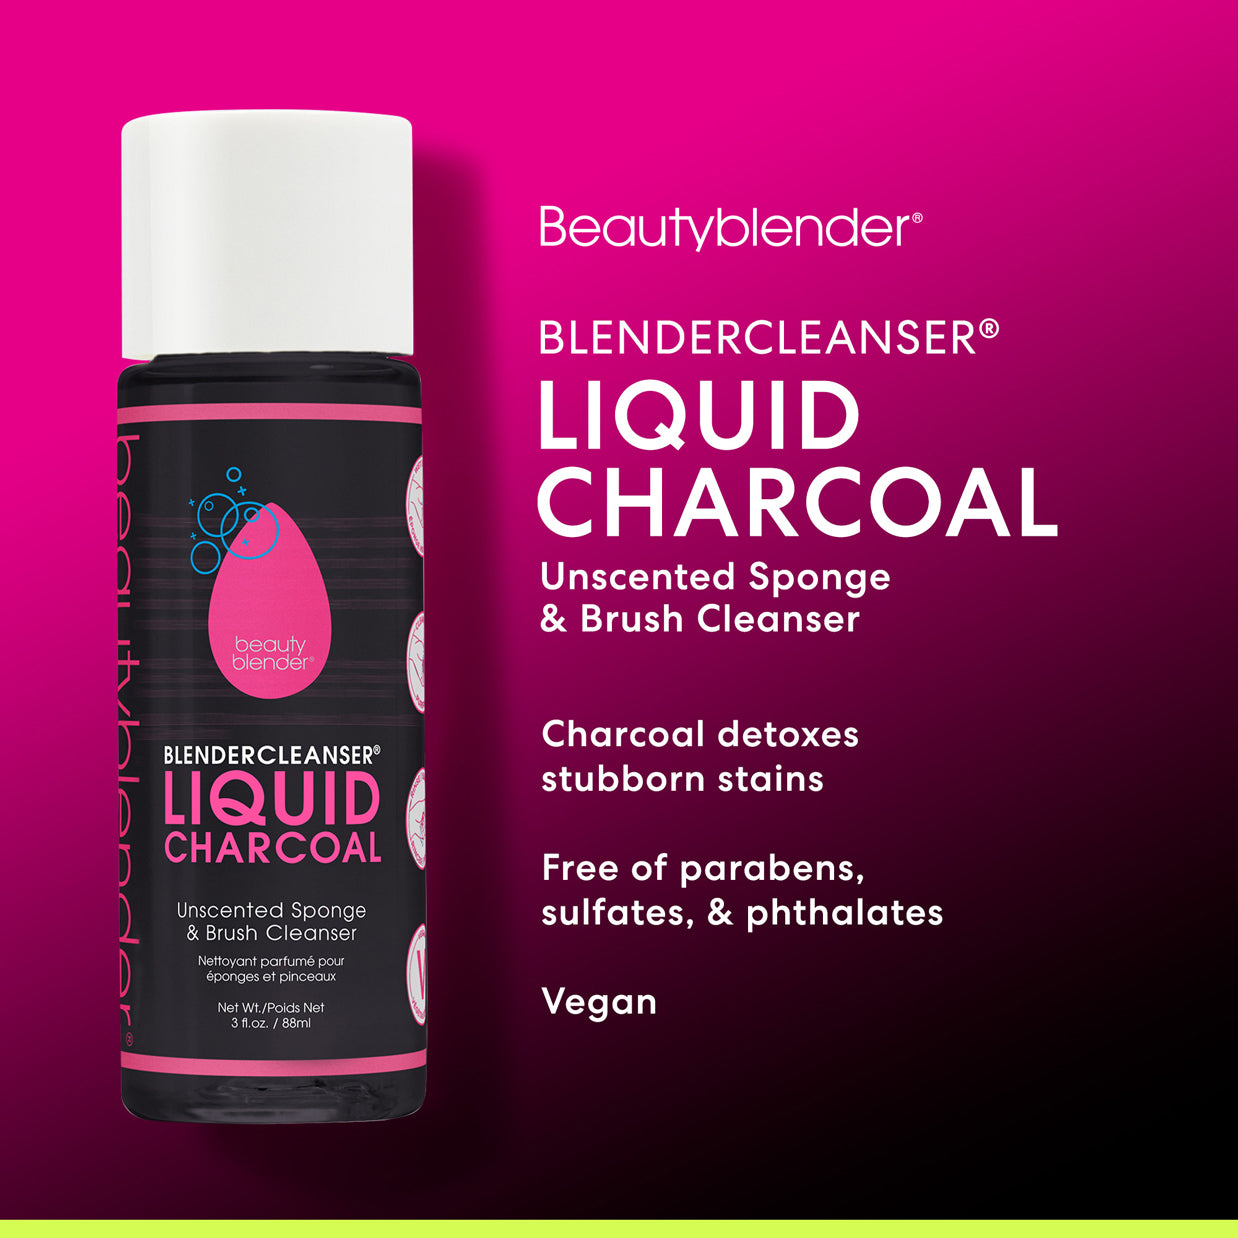 Blendercleanser® Liquid Charcoal Unscented Sponge & Brush Cleanser